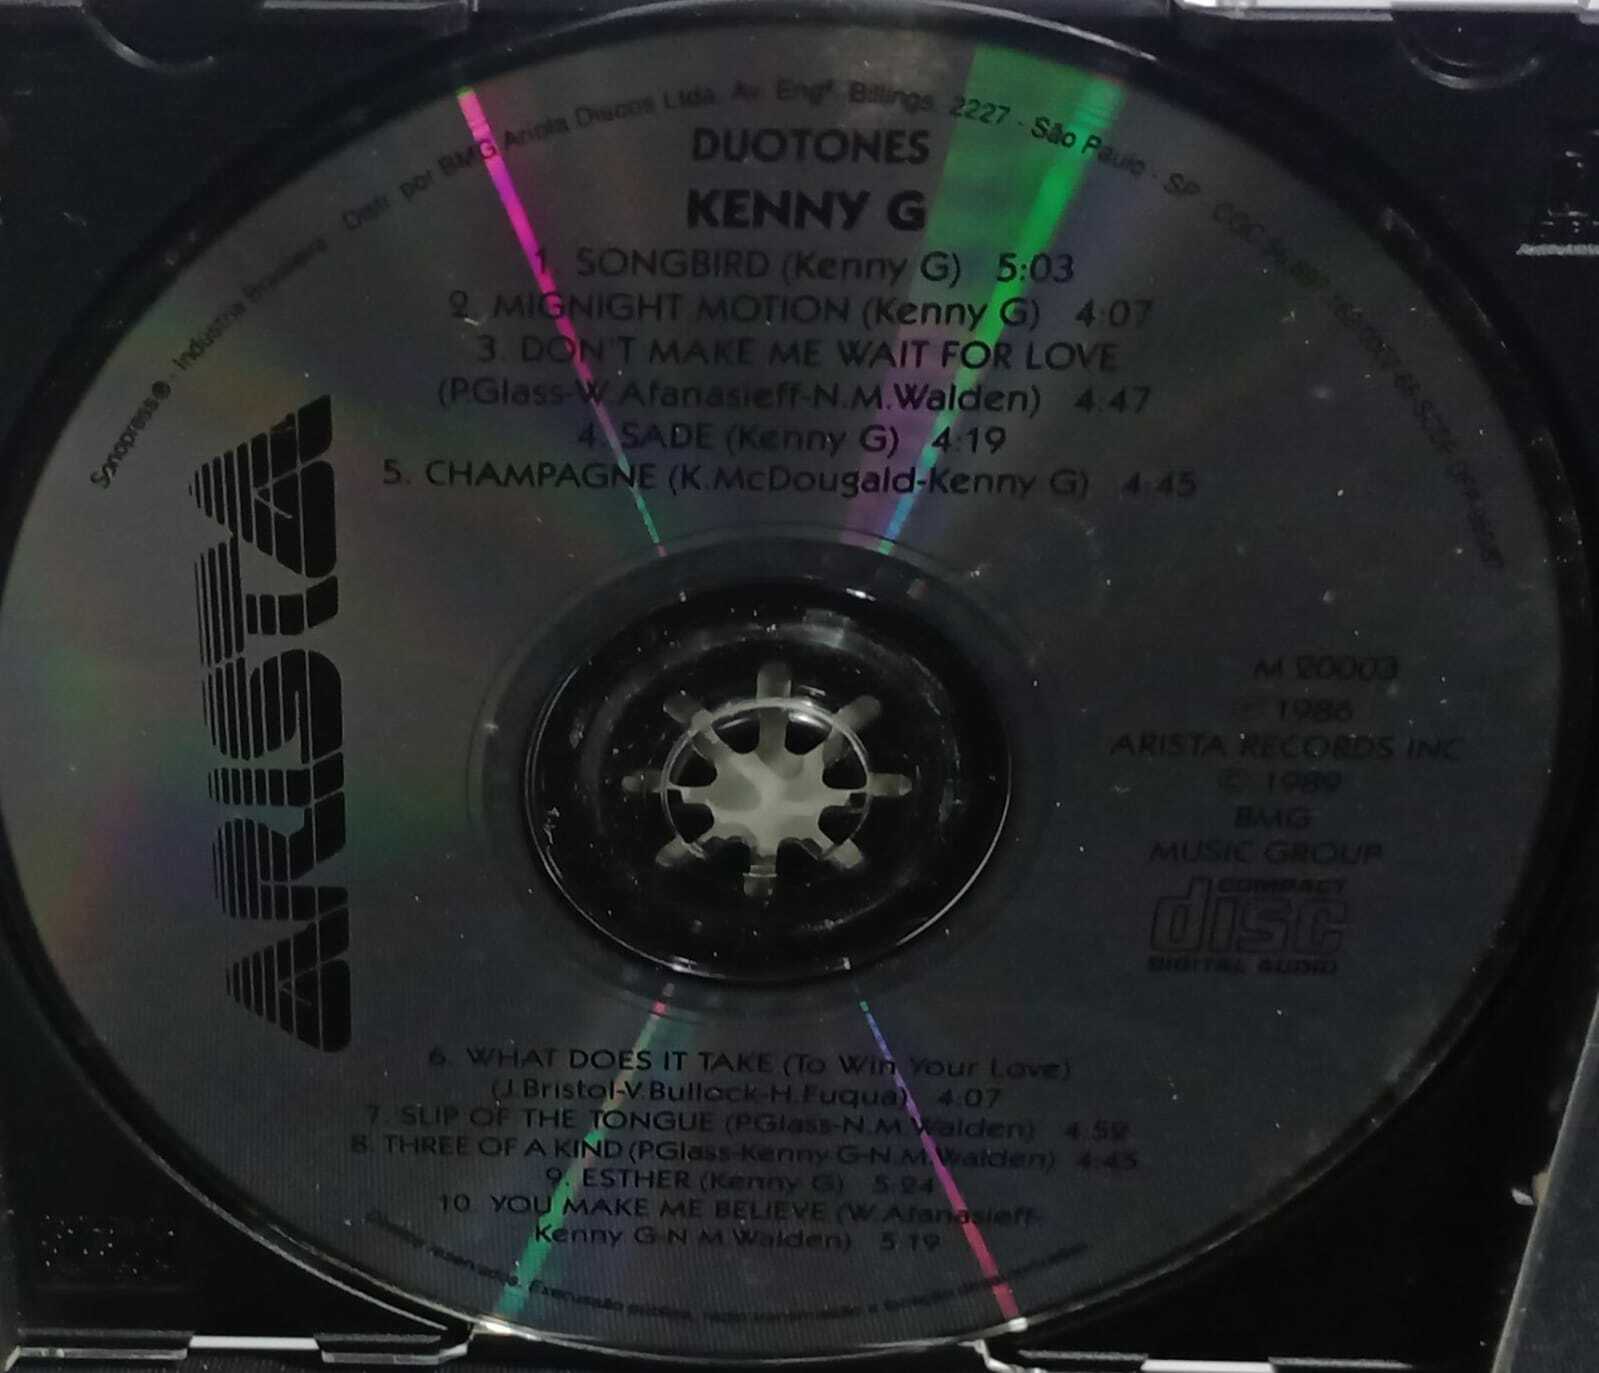 CD - Kenny G - Duotones